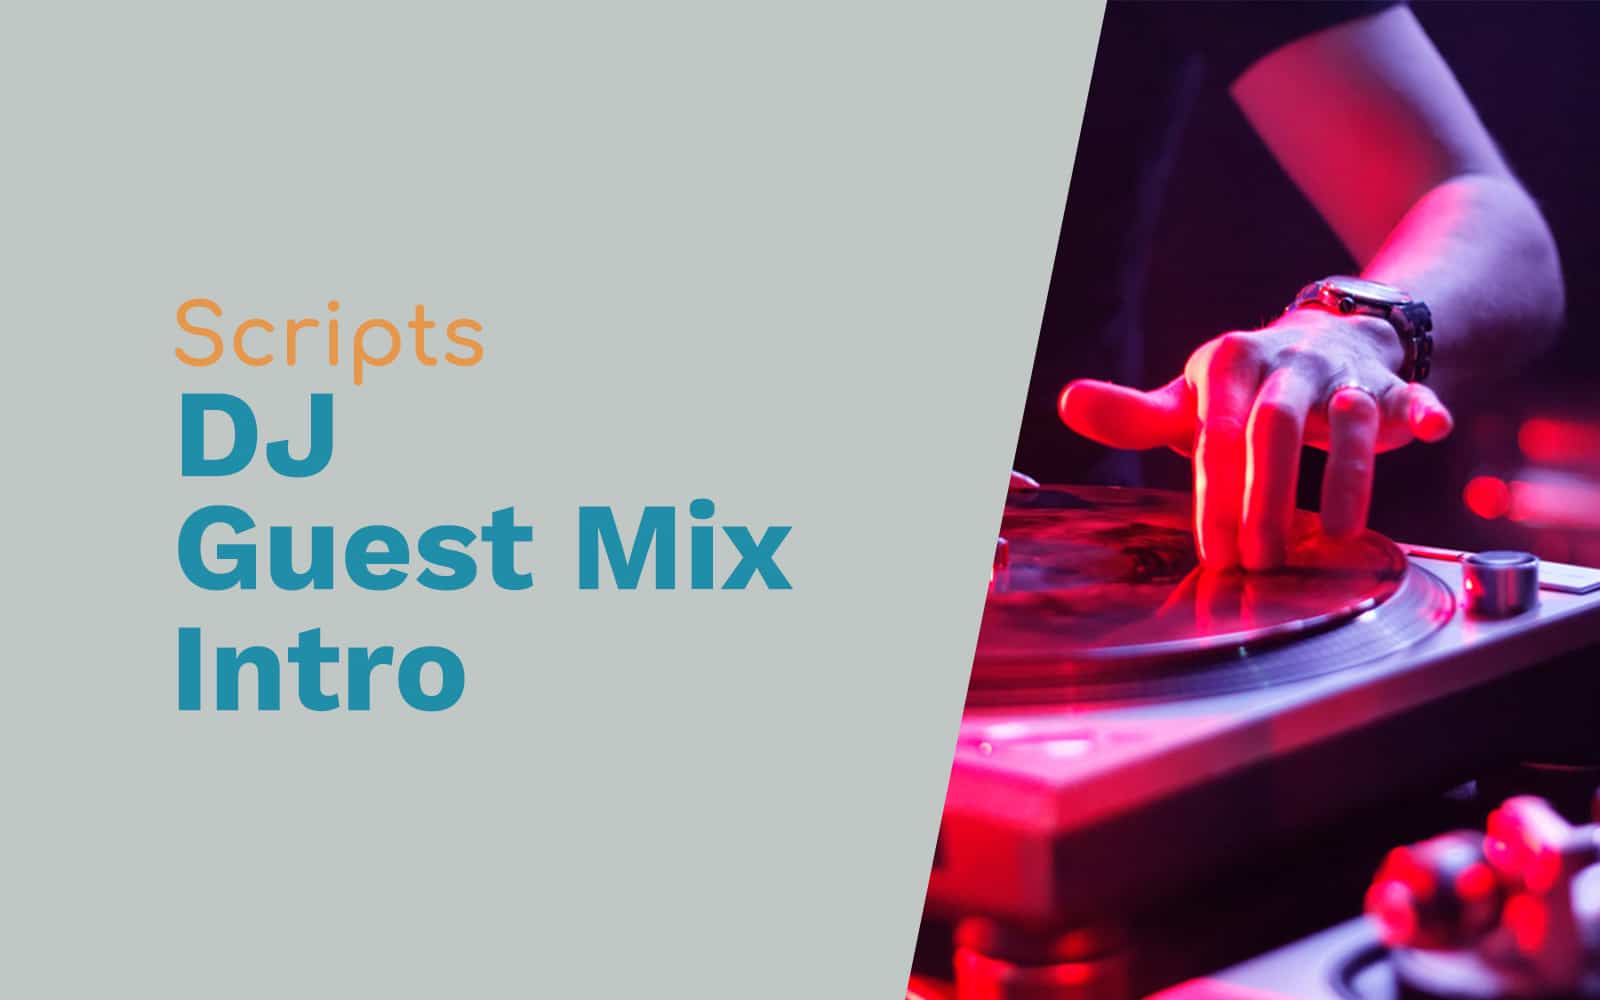 Scripts to Introduce a DJ Guest Mix DJ Drops DJ guest mix Music Radio Creative